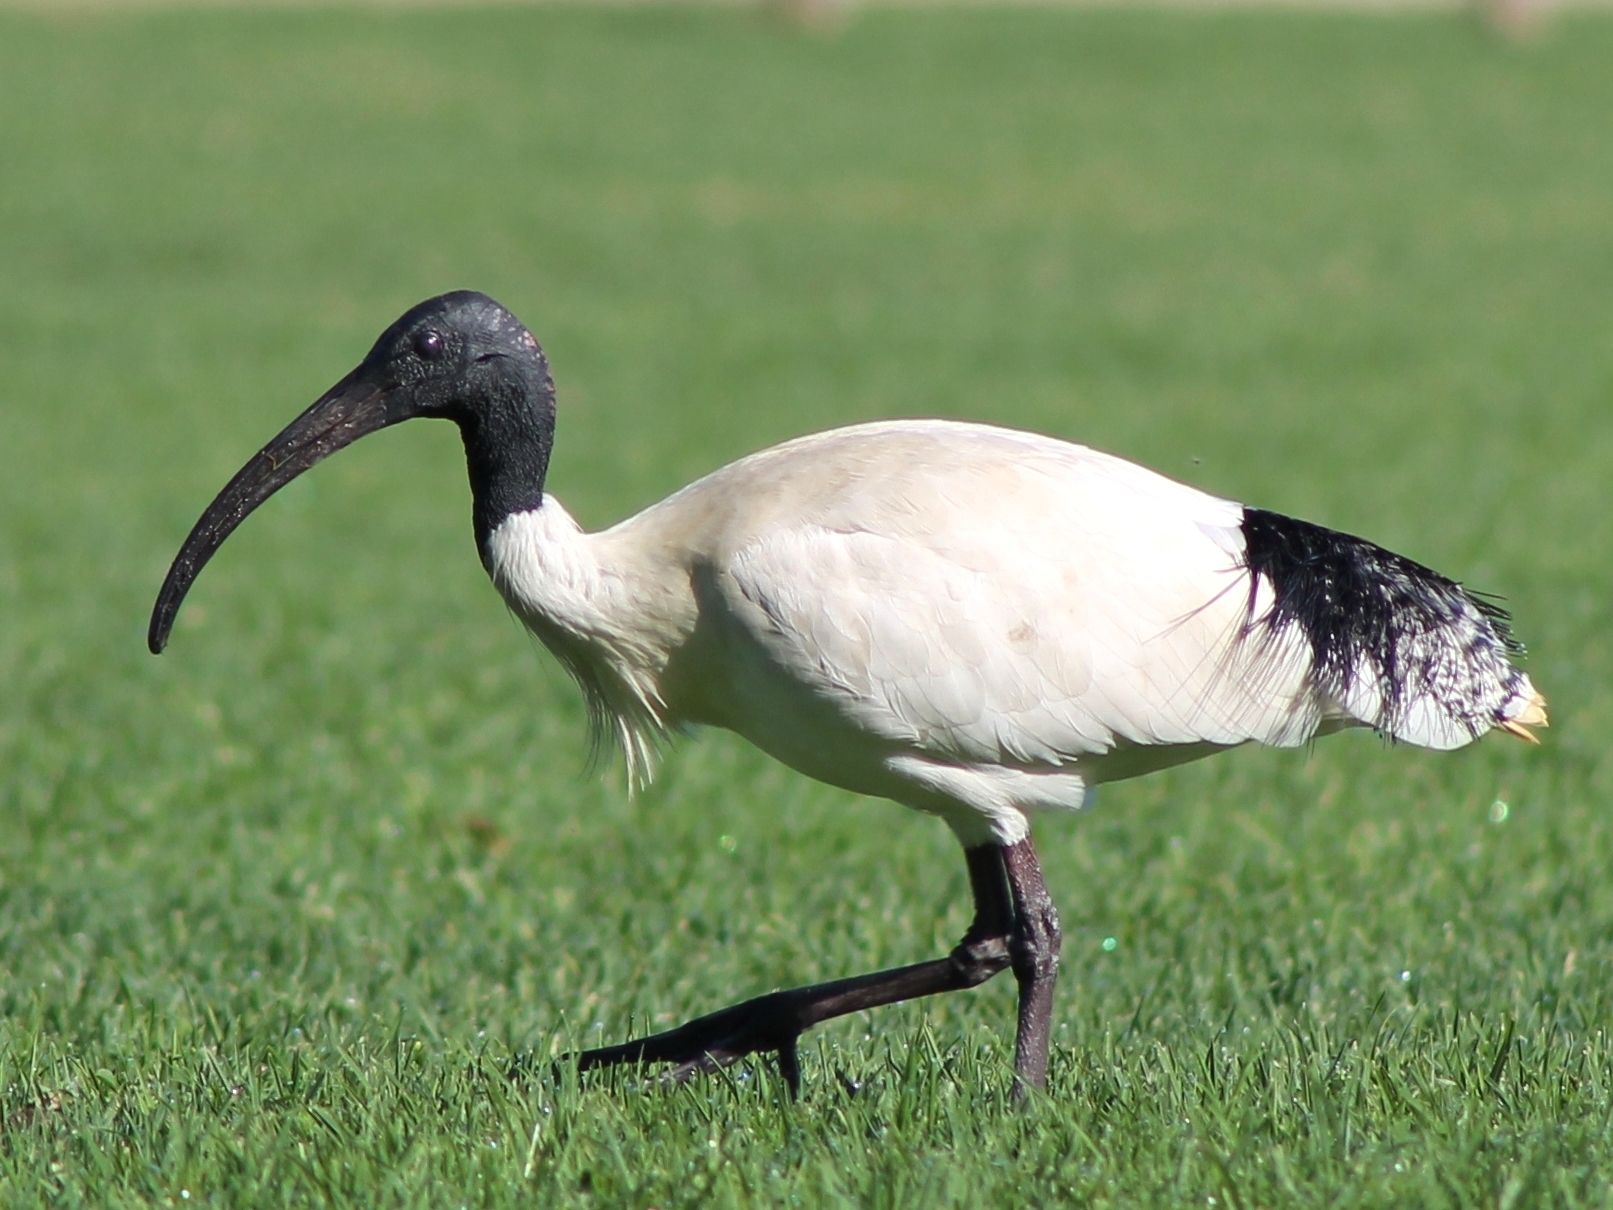 ibis bird - Google Search | Beautiful birds | Pinterest | Bird ...